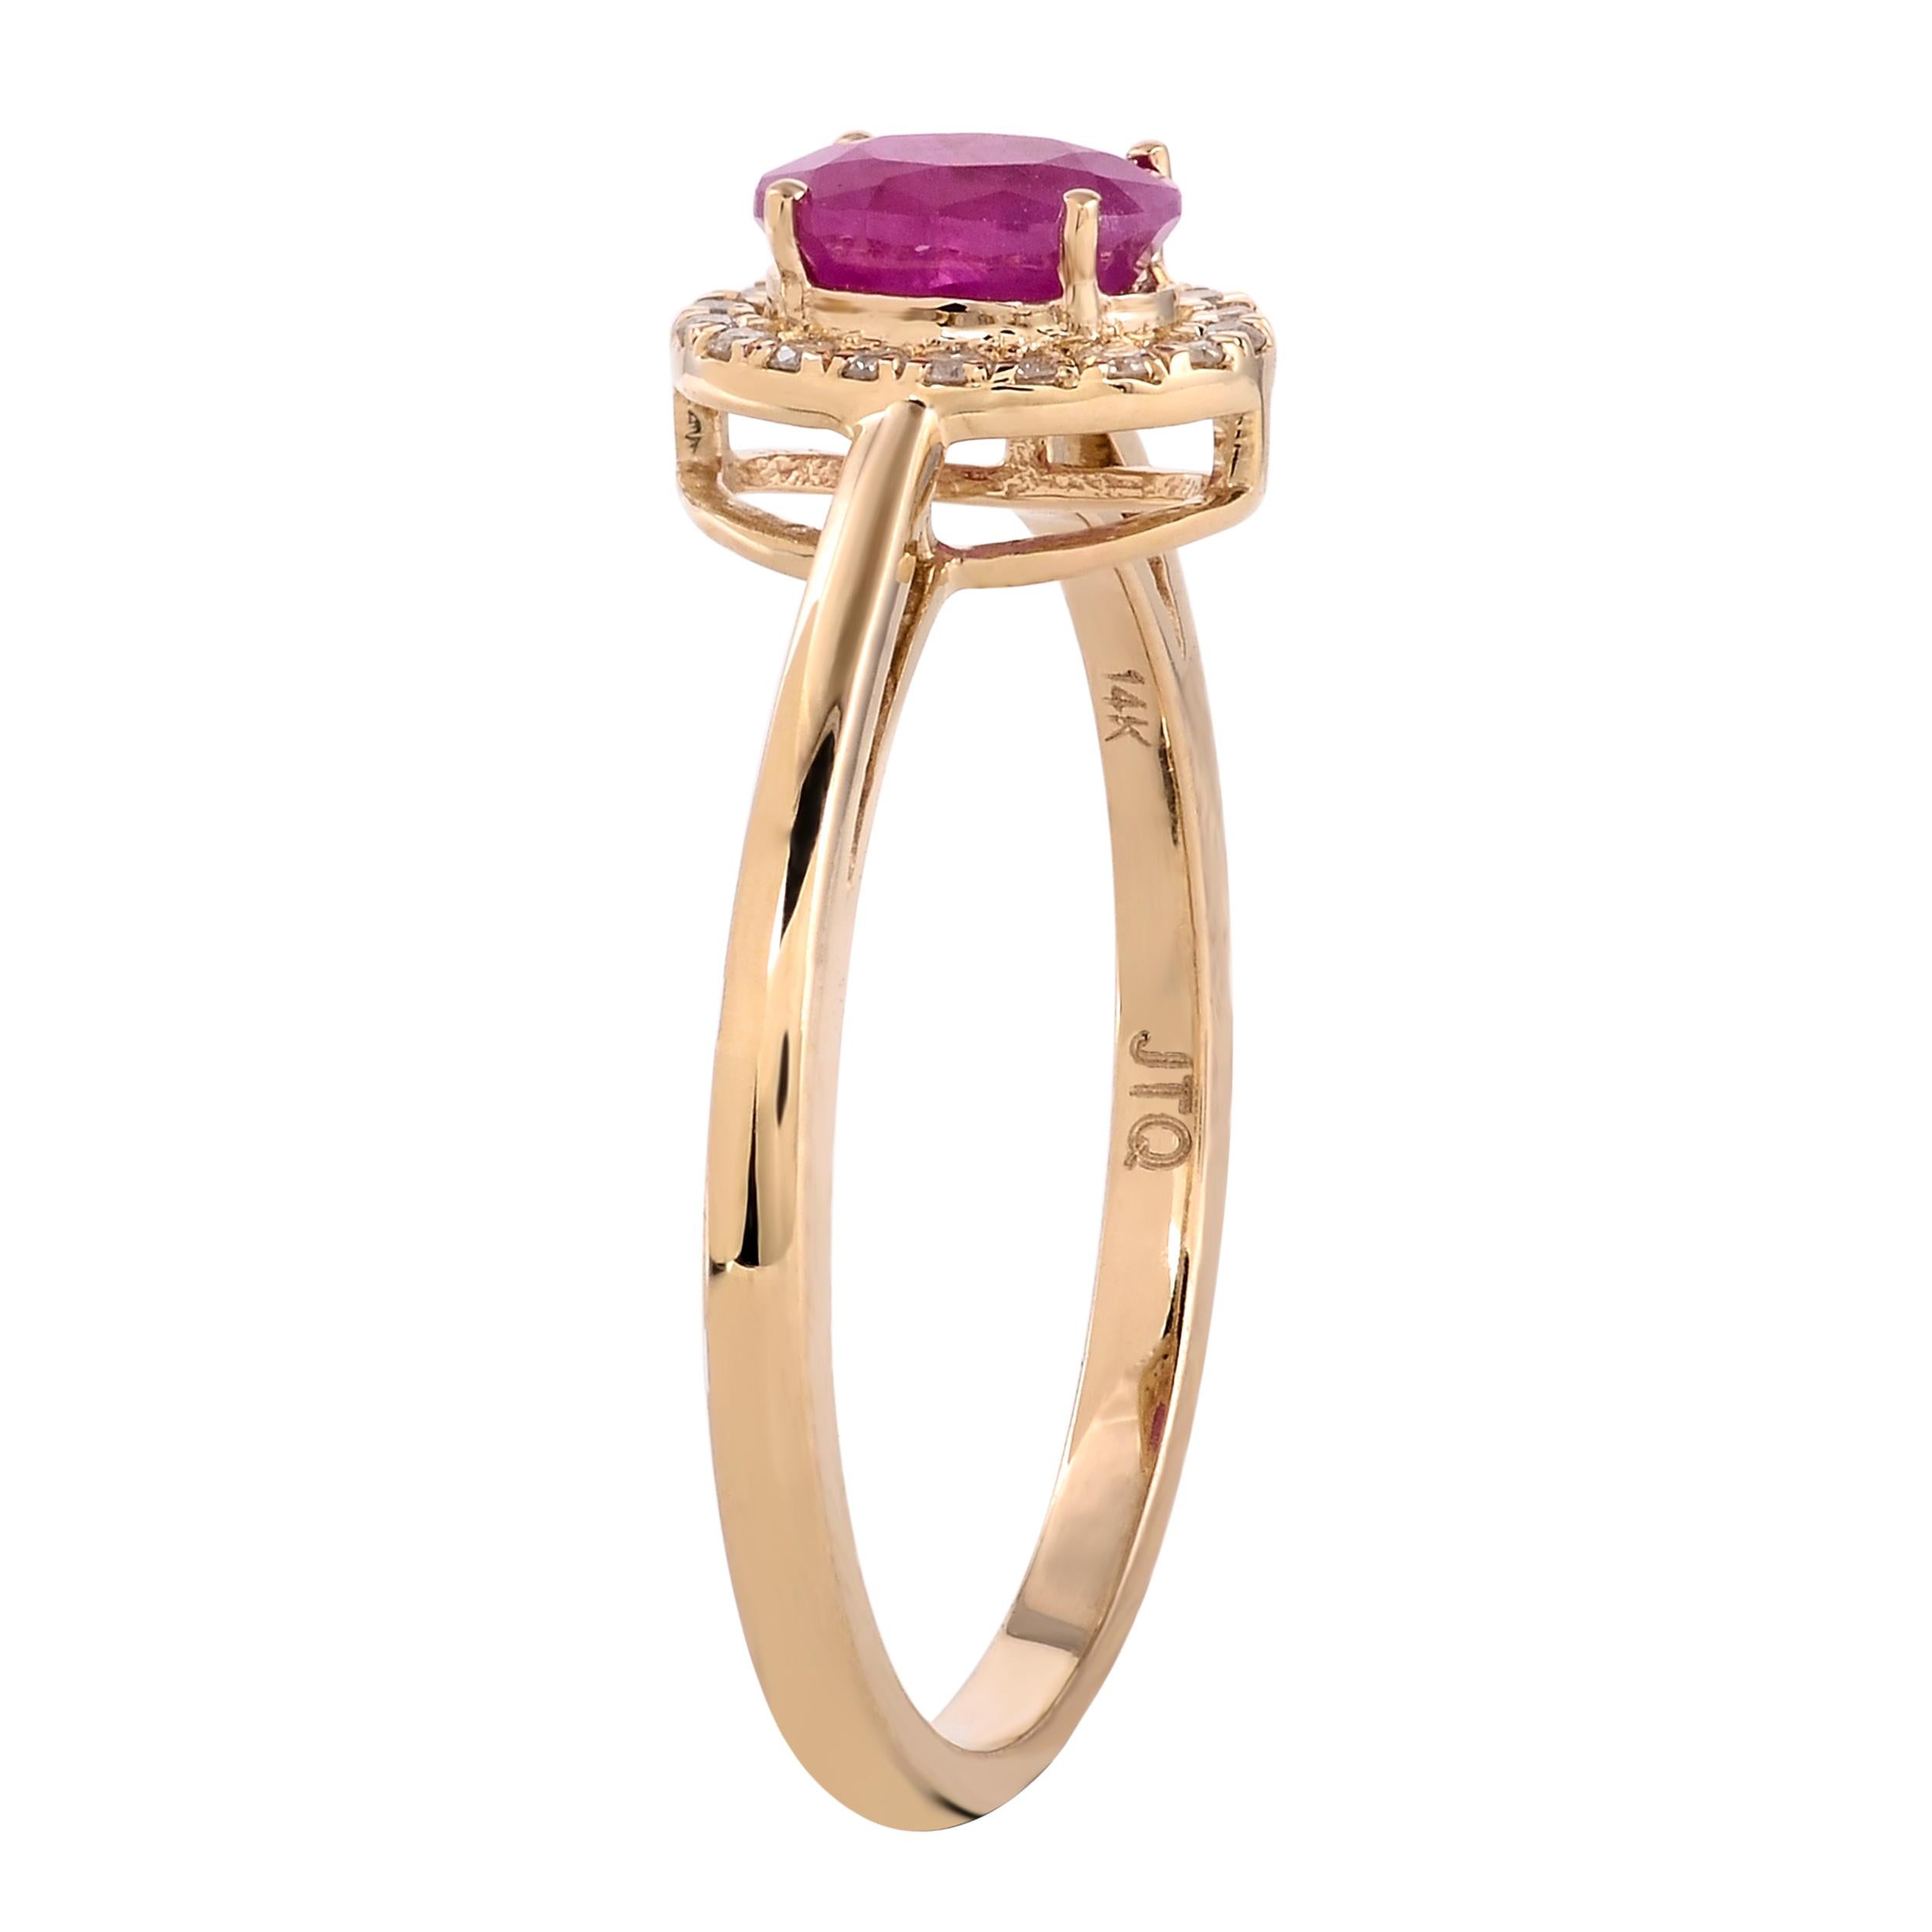 Elegant 14K Ruby & Diamond Cocktail Ring, Size 7 - Statement Jewelry Piece For Sale 2